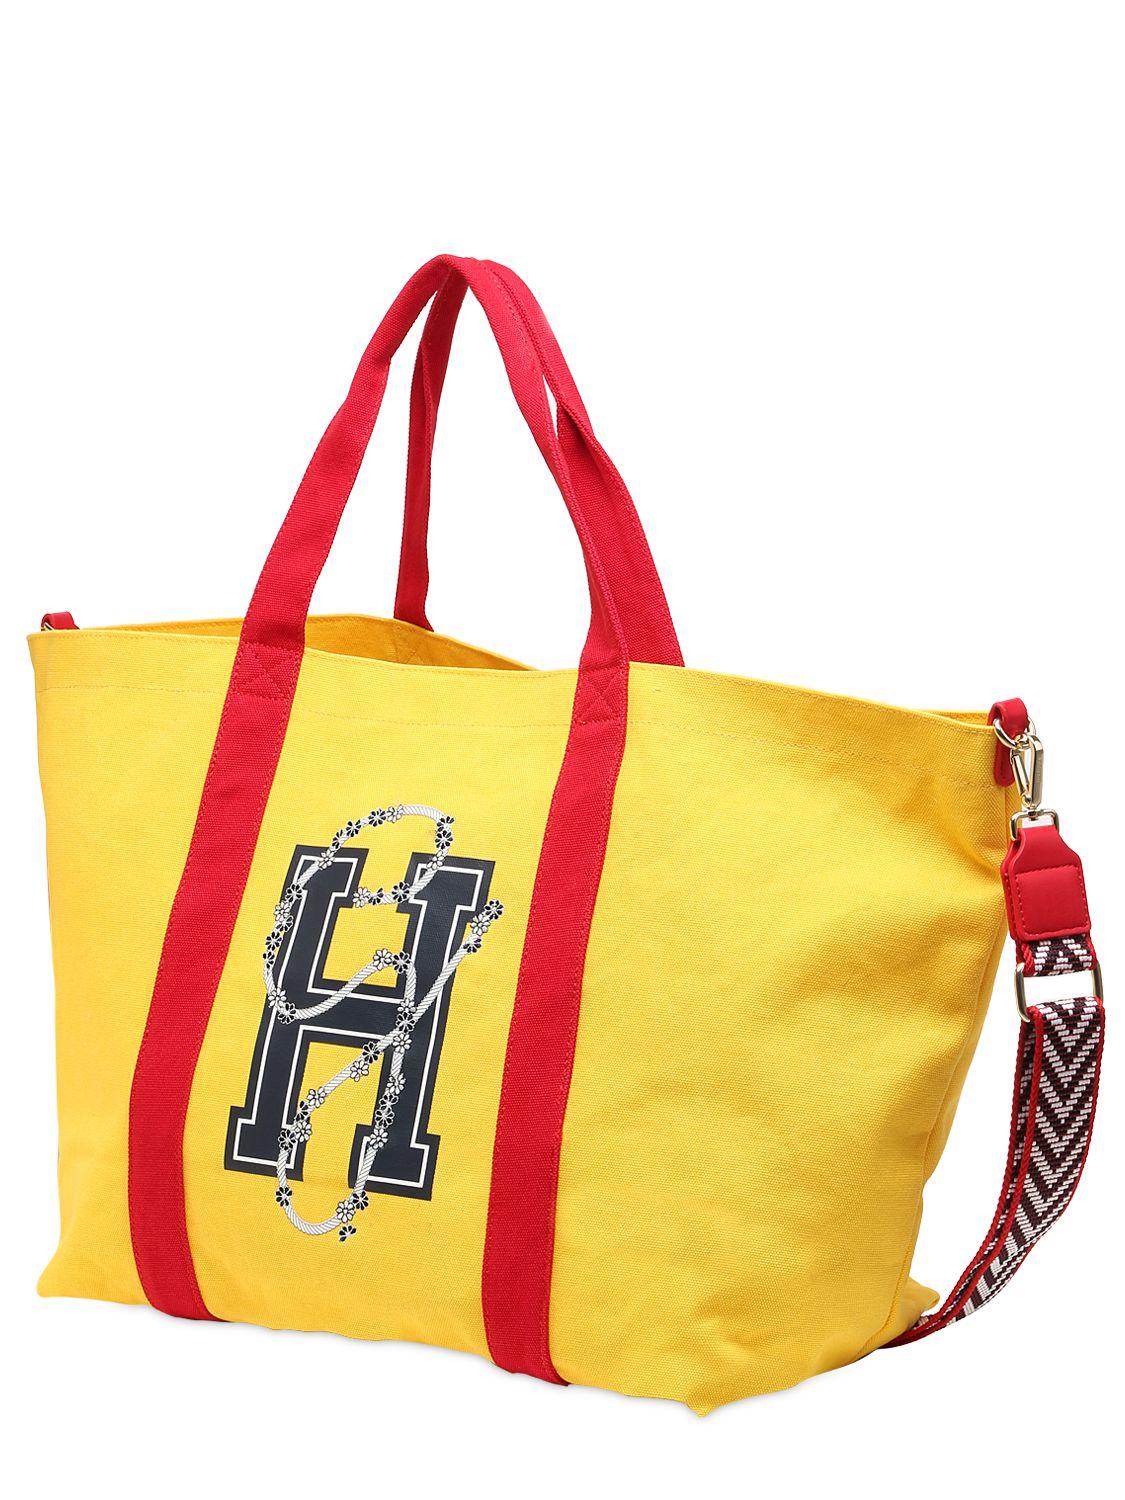 Lyst - Tommy Hilfiger H Logo Canvas Tote Bag Gigi Hadid in Yellow